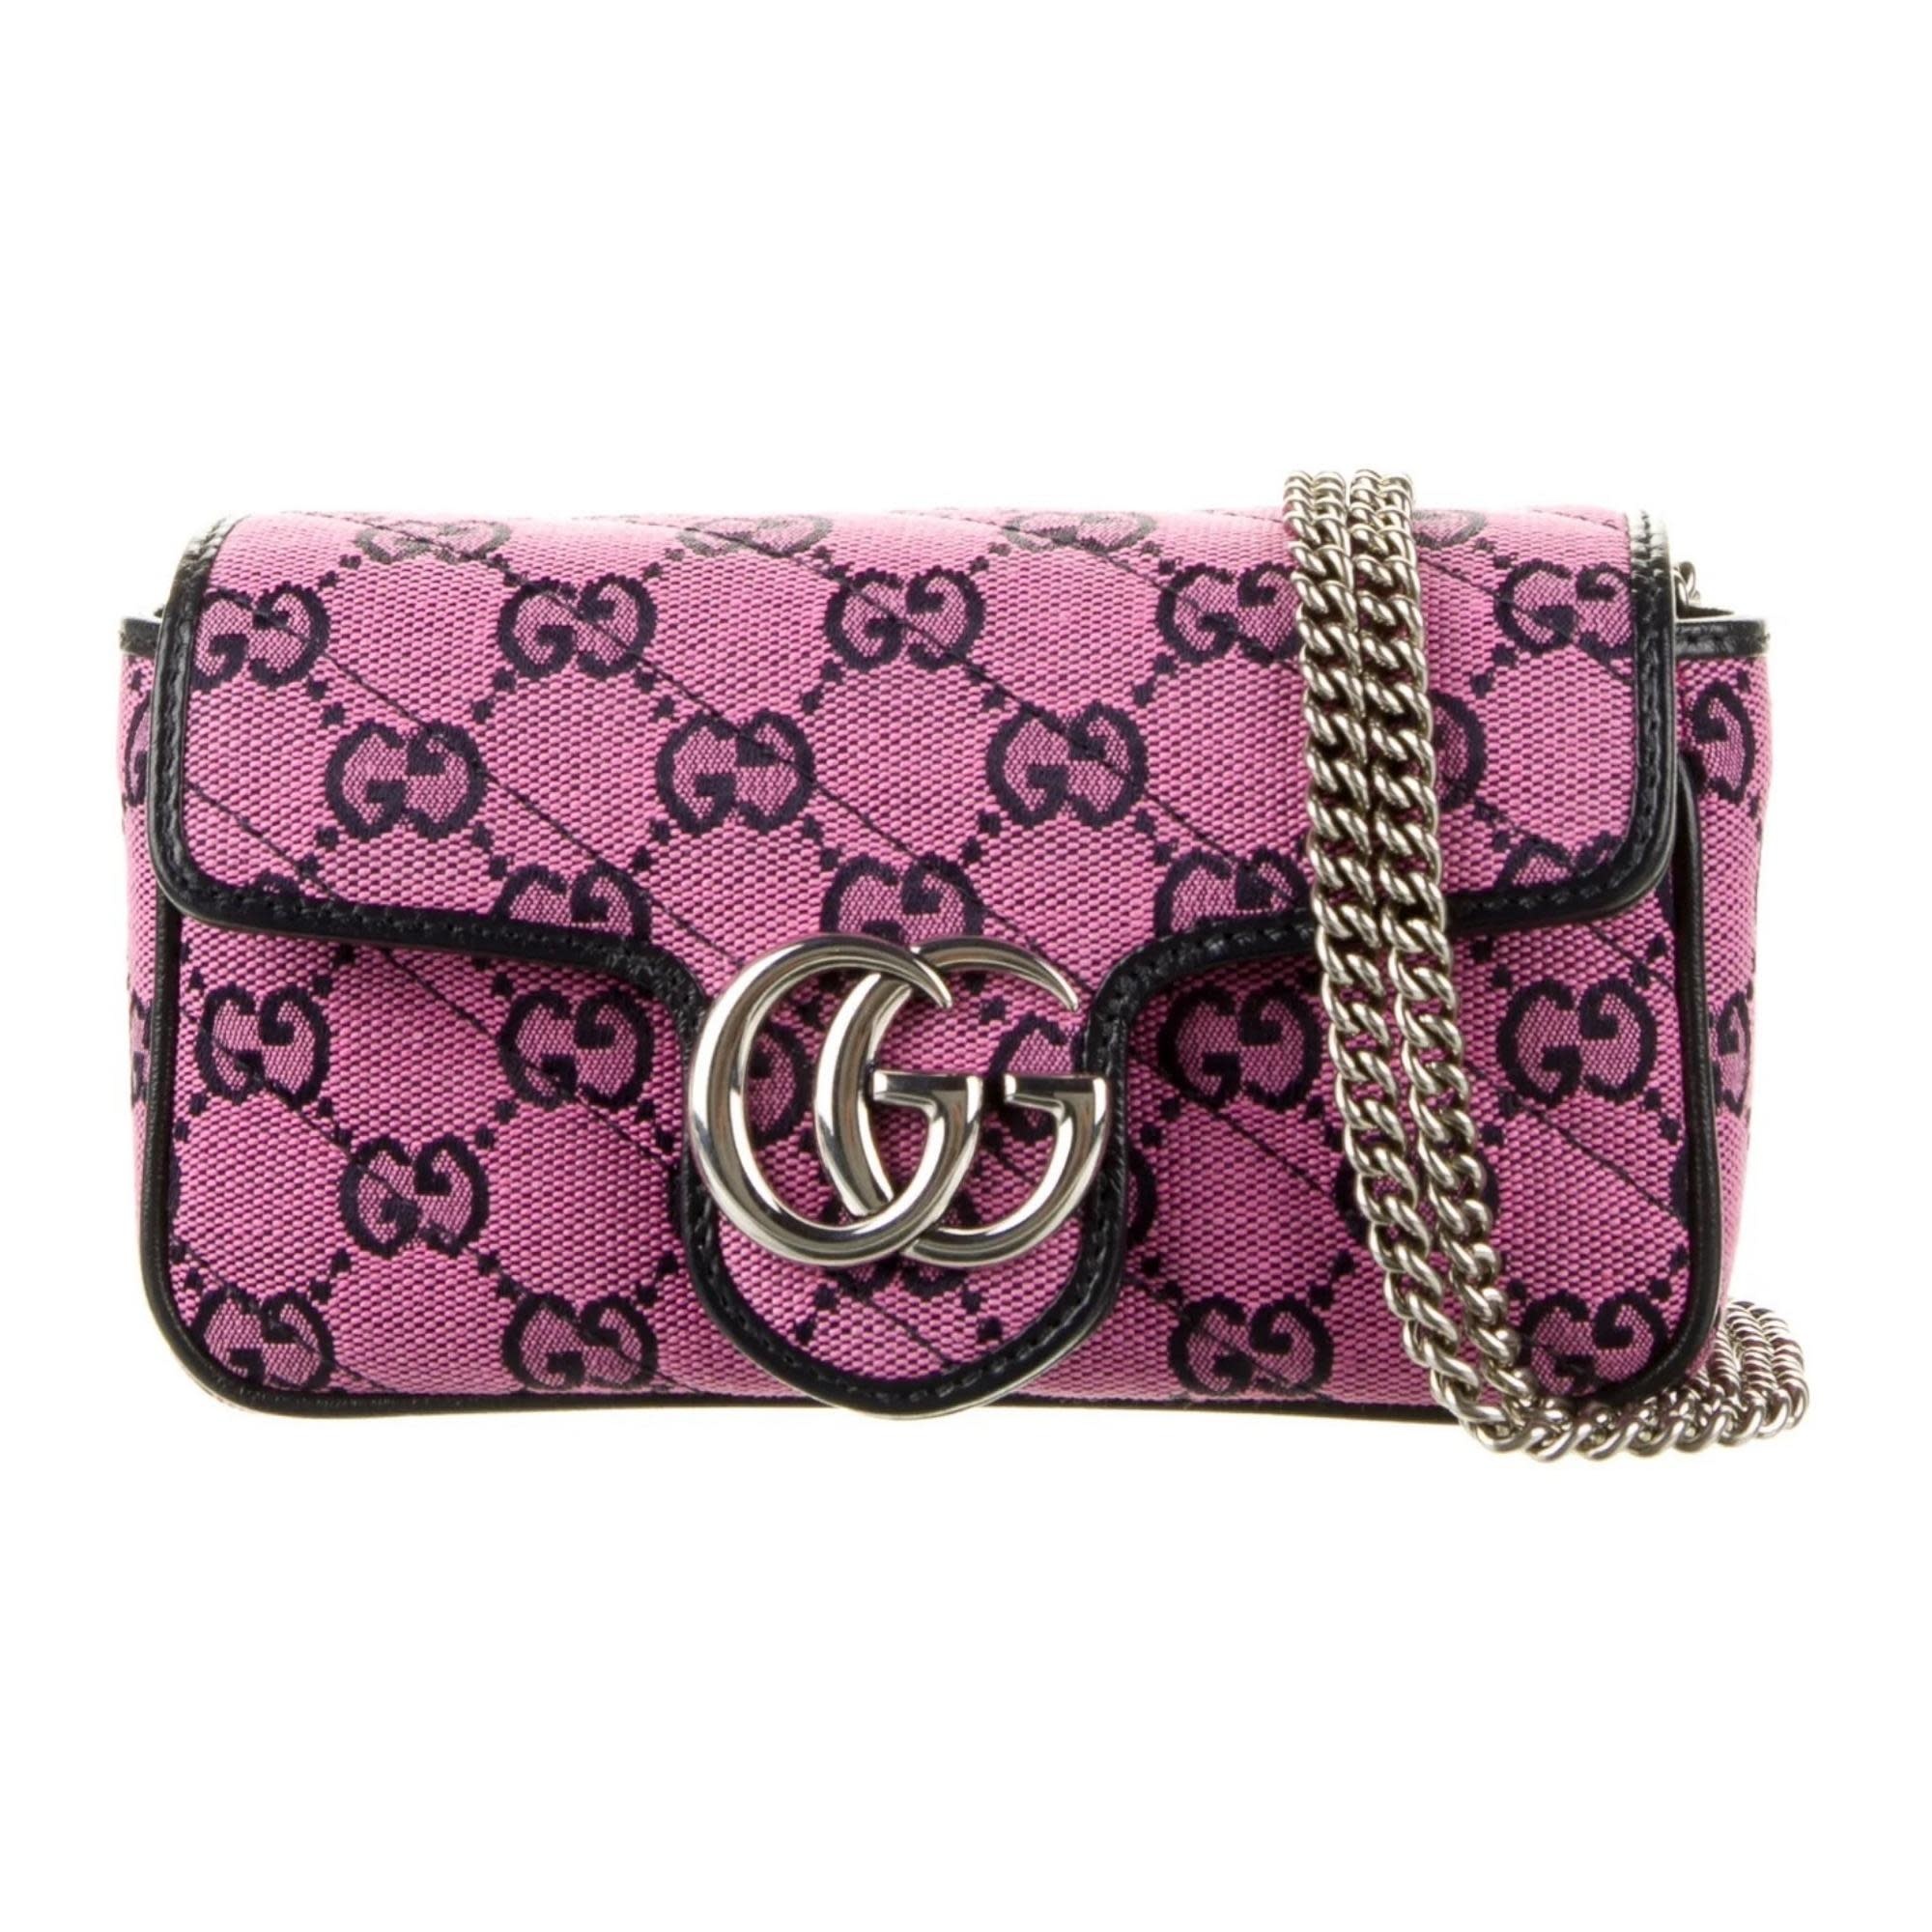 5 Ways to Authenticate a Gucci Handbag